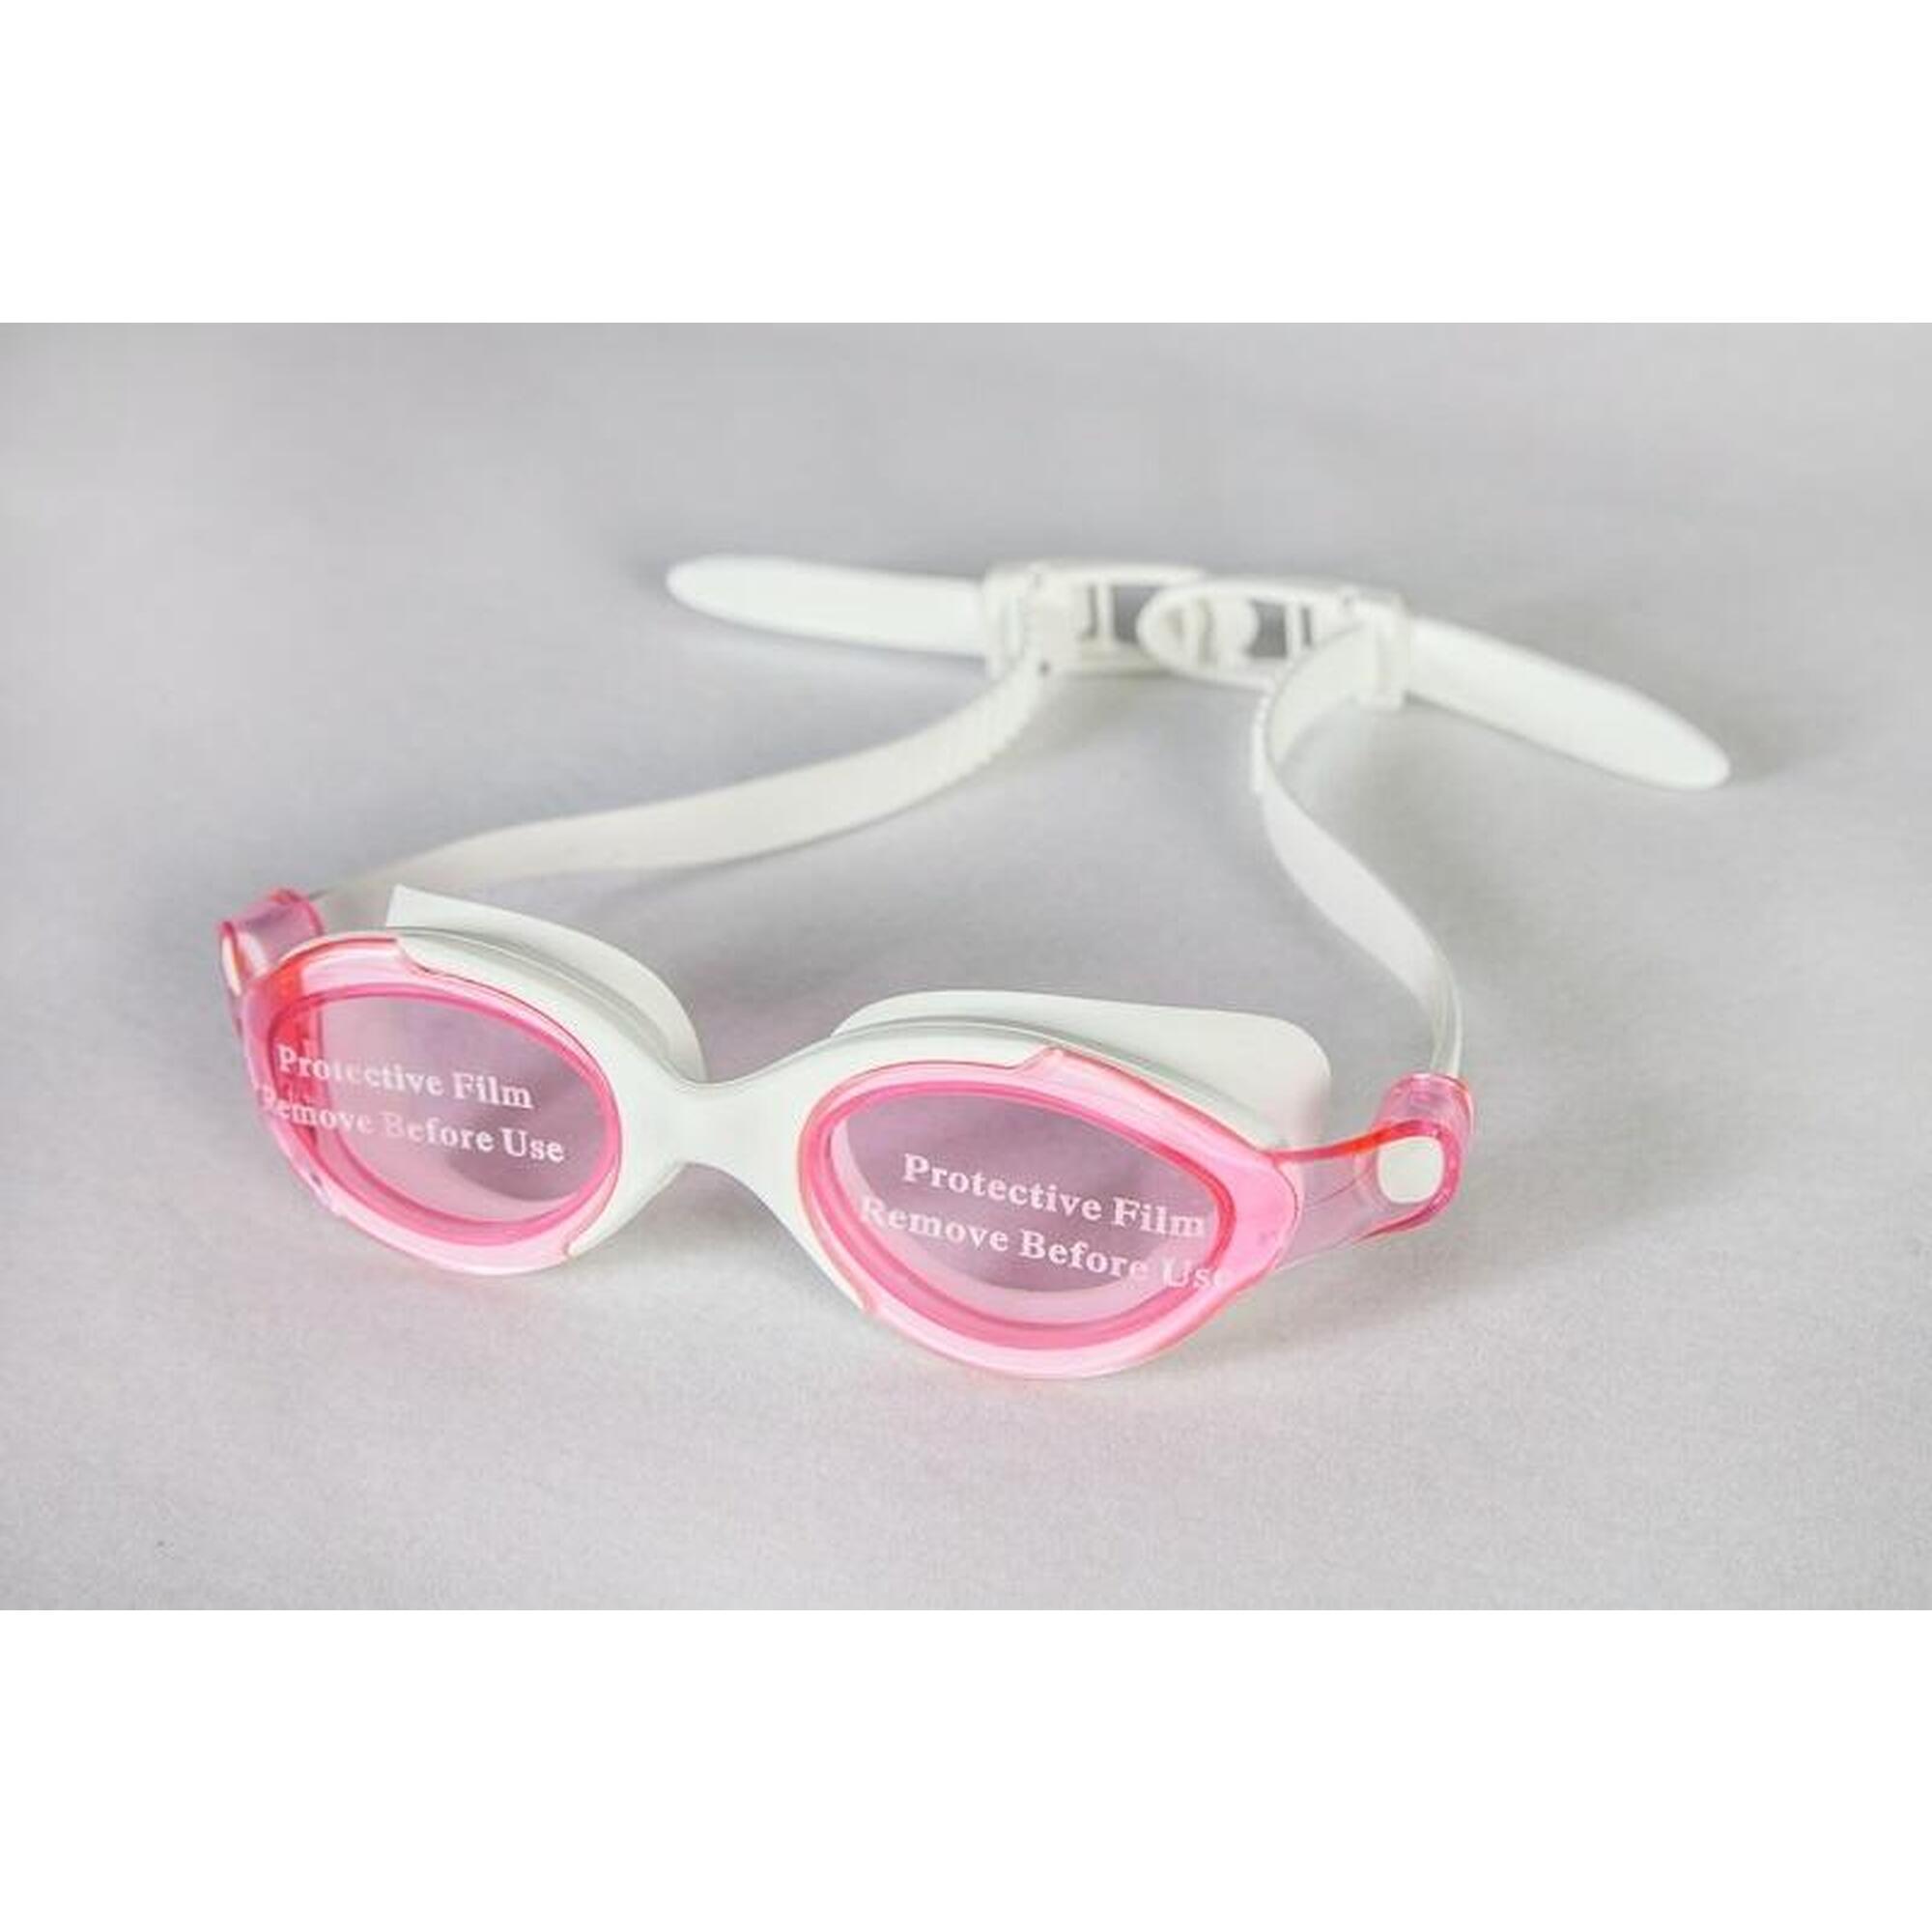 MS-9500 成人防霧, 防UV 矽膠泳鏡 - 白色/粉紅色